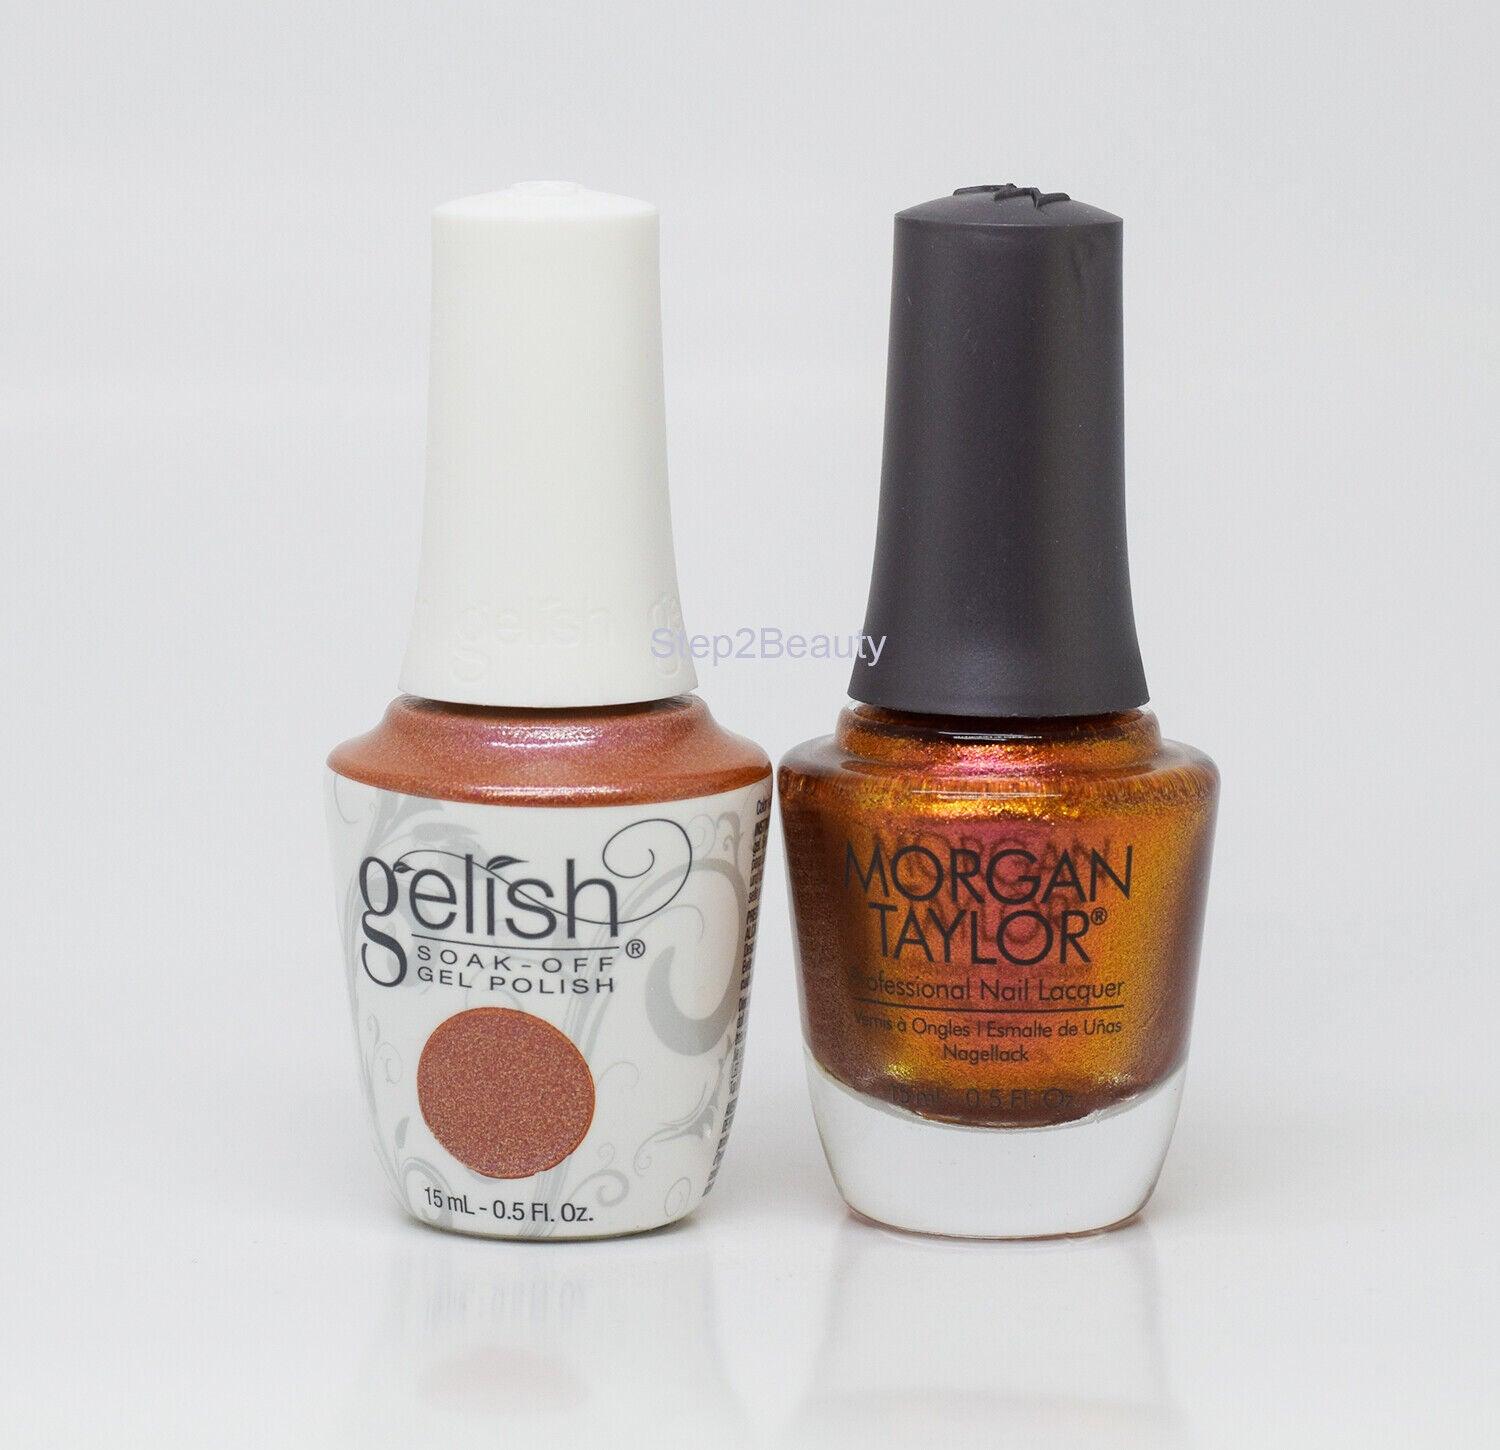 Gelish DUO Soak Off Gel Polish + Morgan Taylor Nail Lacquer -#875 Sunrise In The